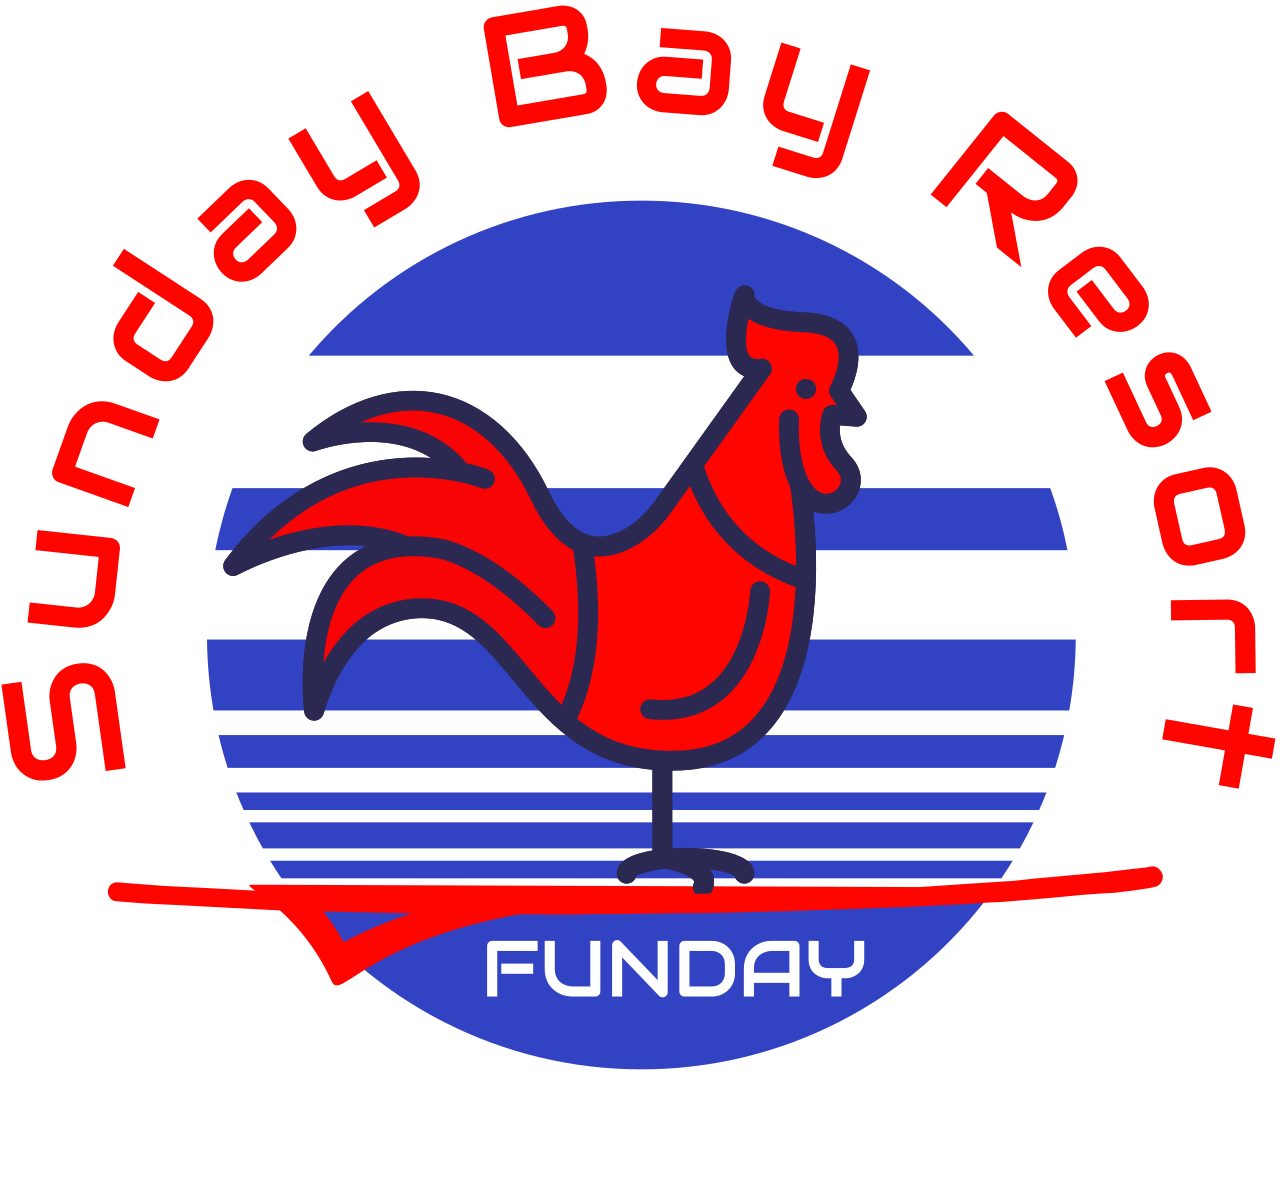 Sunday Bay Resort's web page